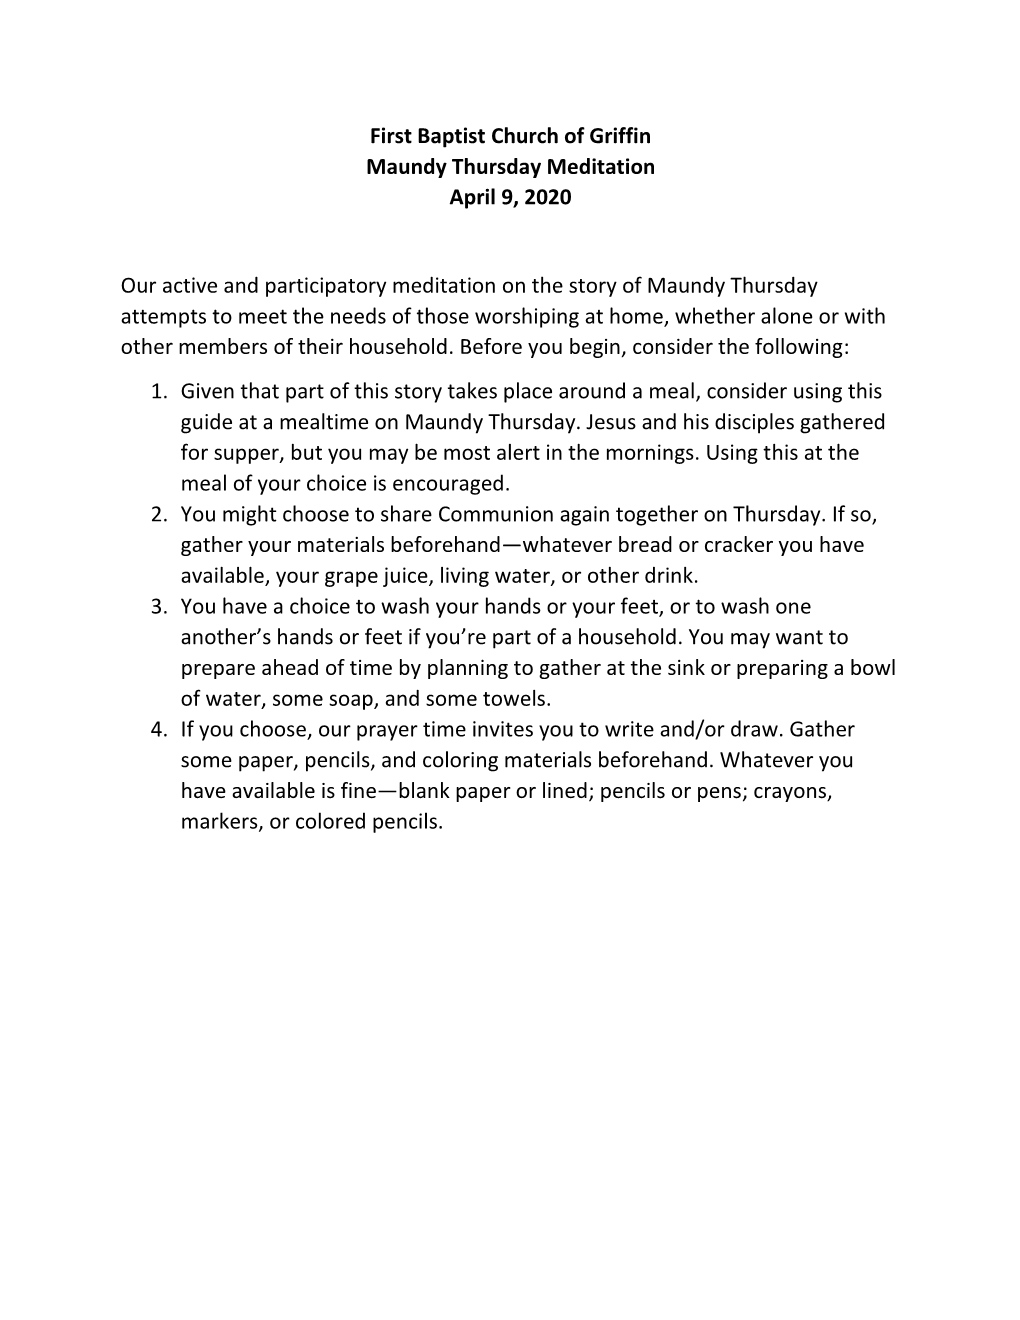 First Baptist Church of Griffin Maundy Thursday Meditation April 9, 2020